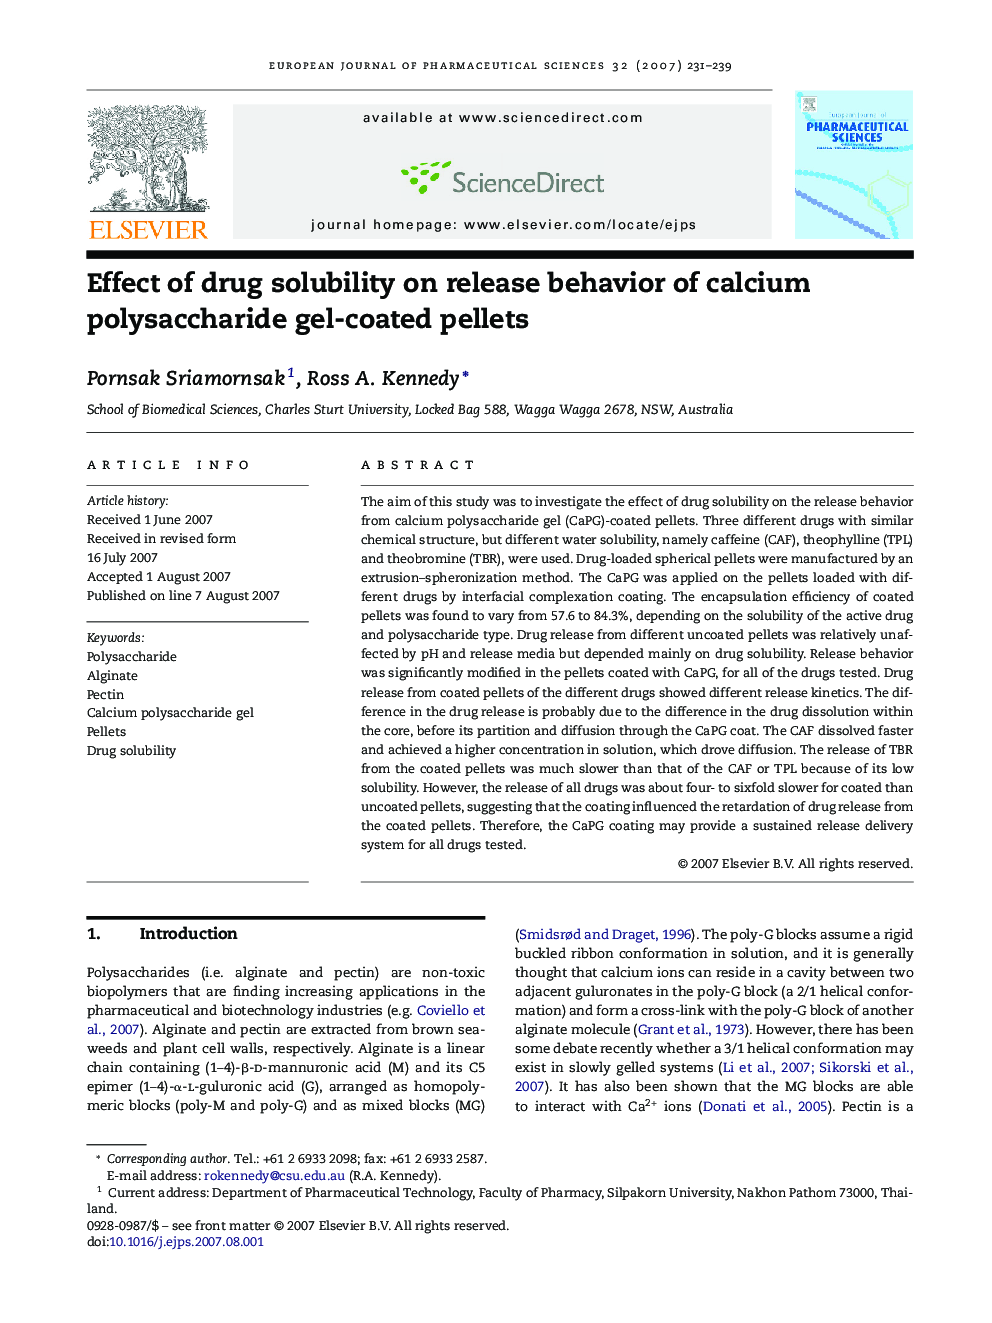 Effect of drug solubility on release behavior of calcium polysaccharide gel-coated pellets